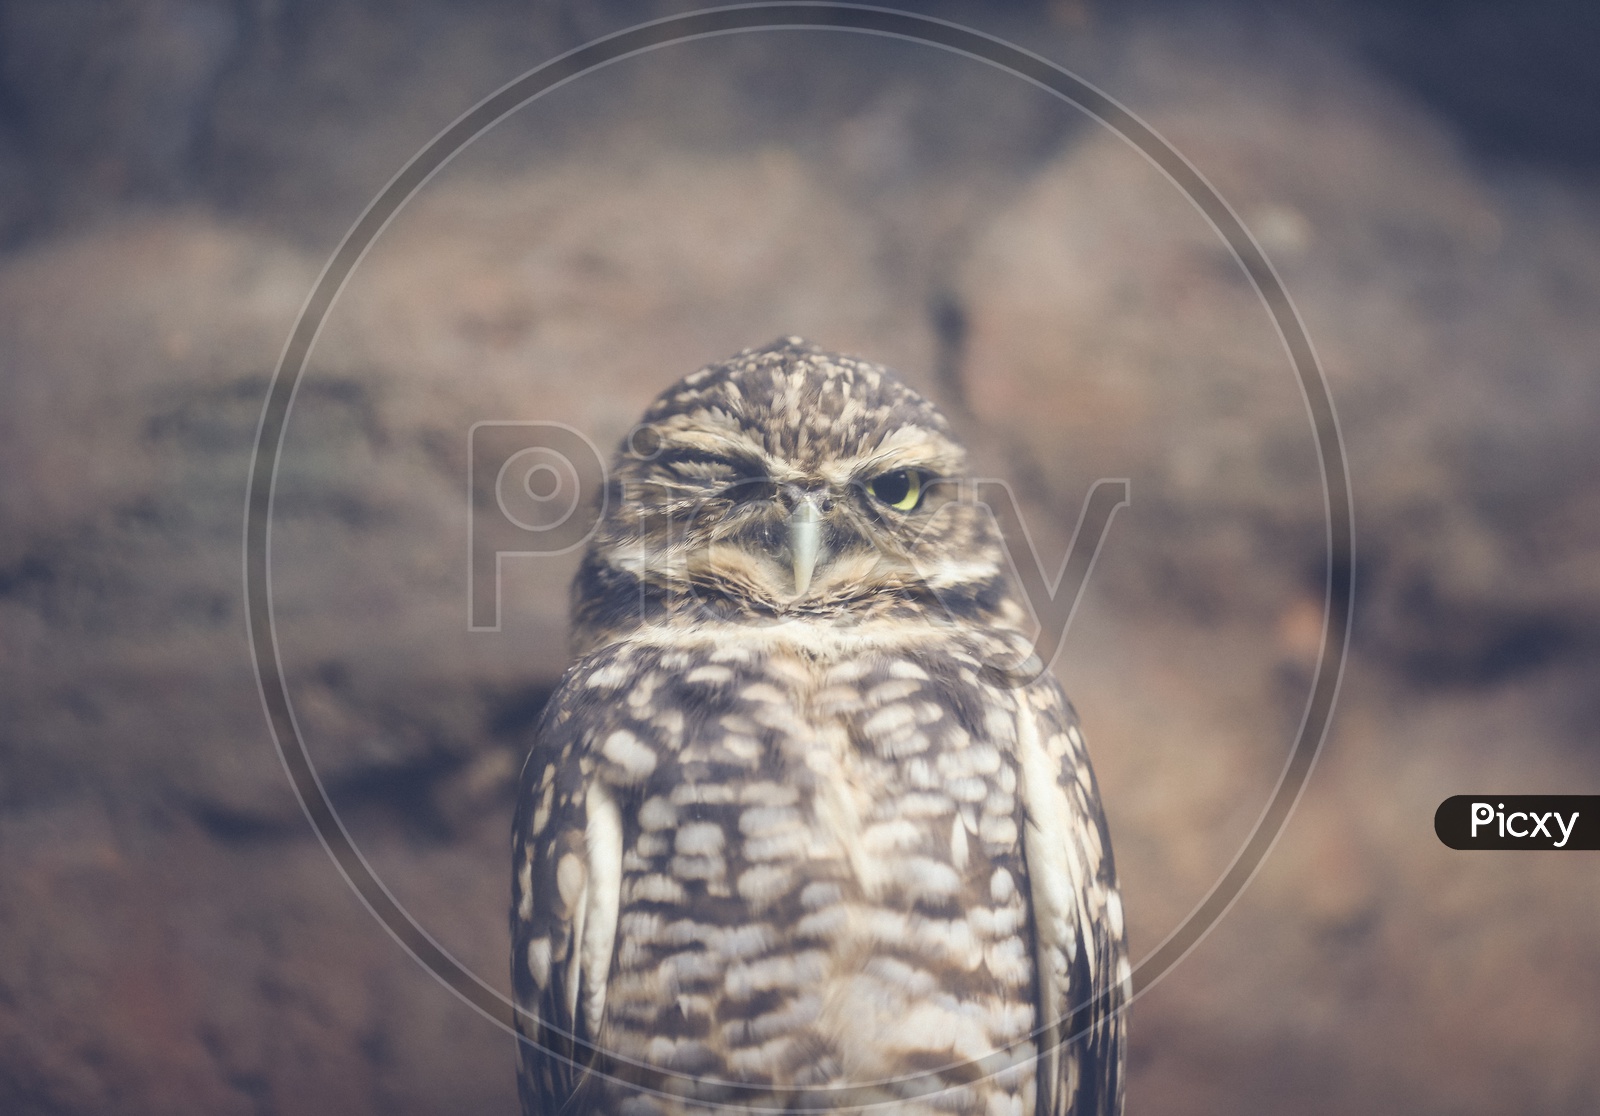 Naughty owl